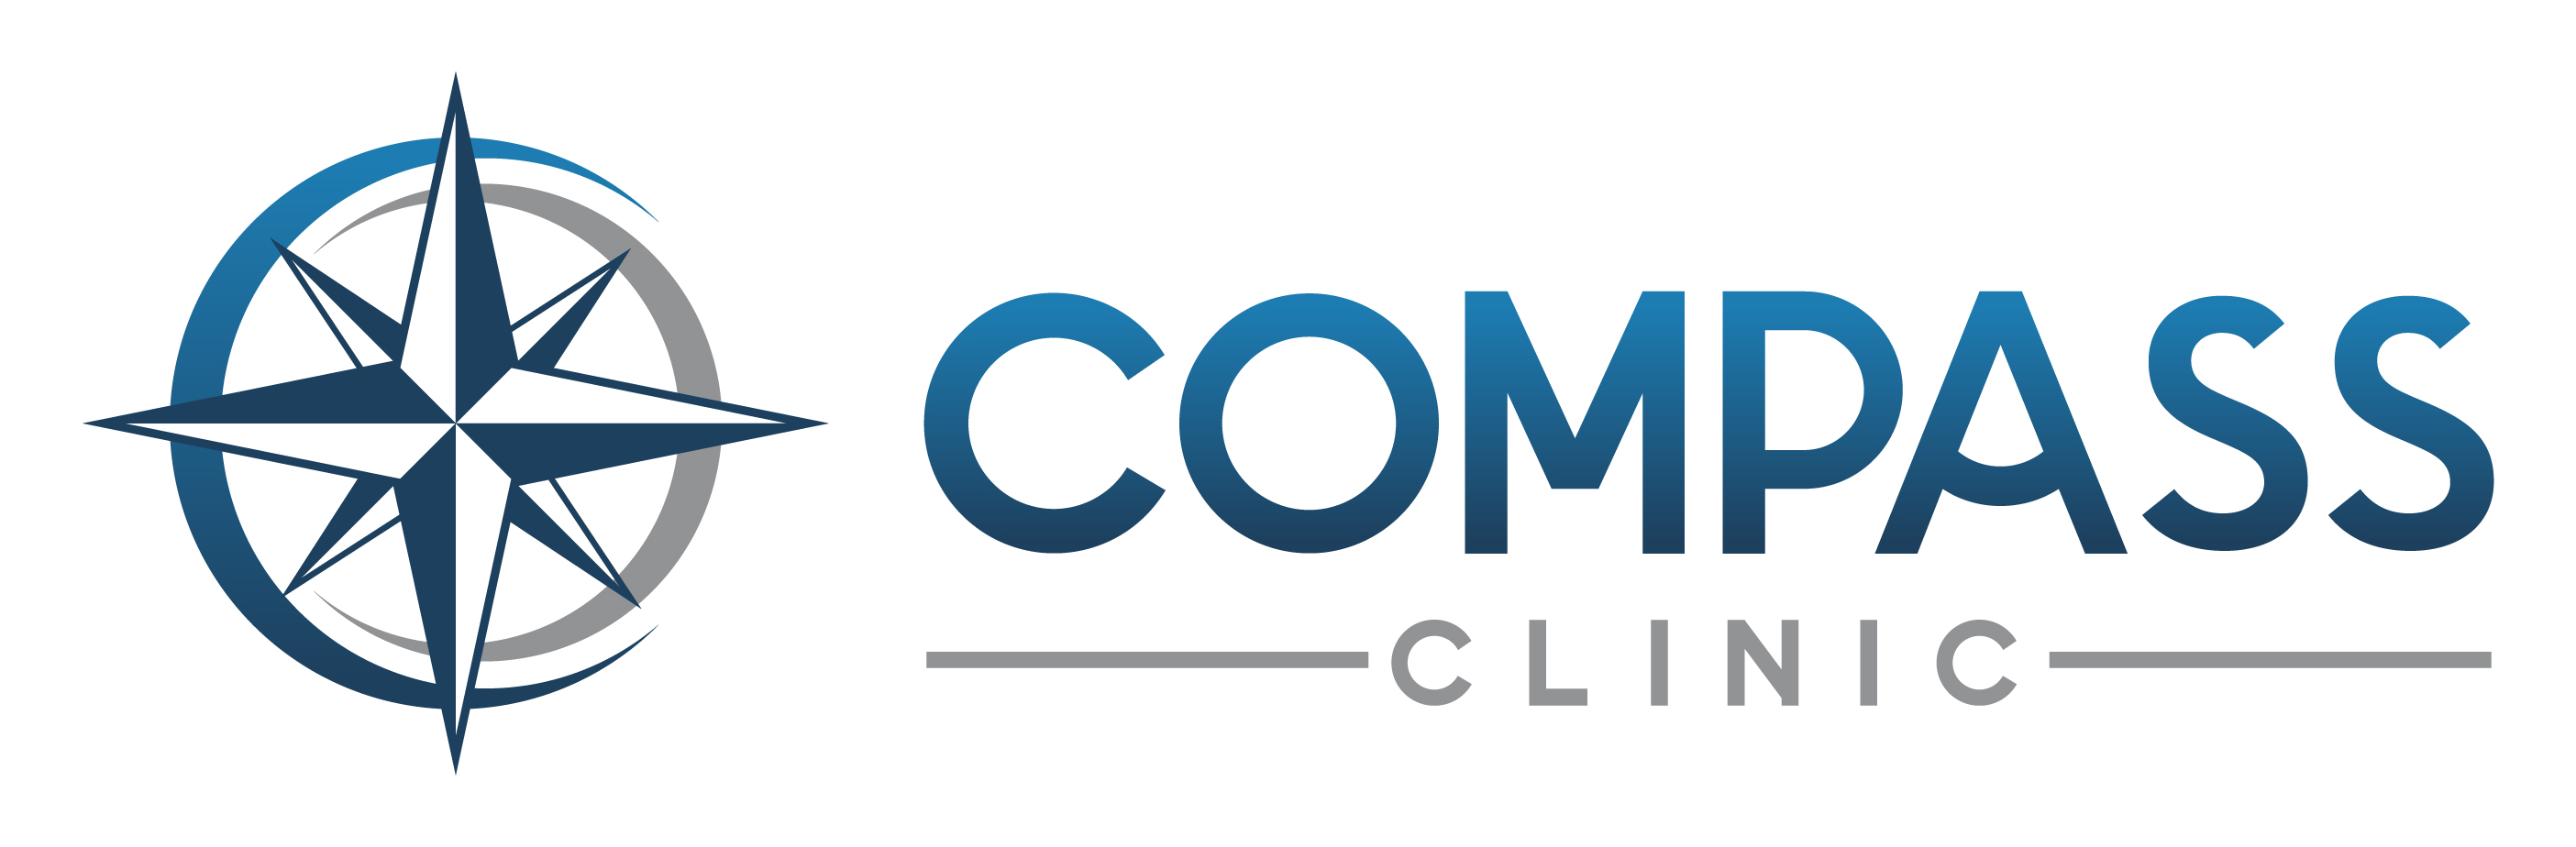 Compass Clinic Blog